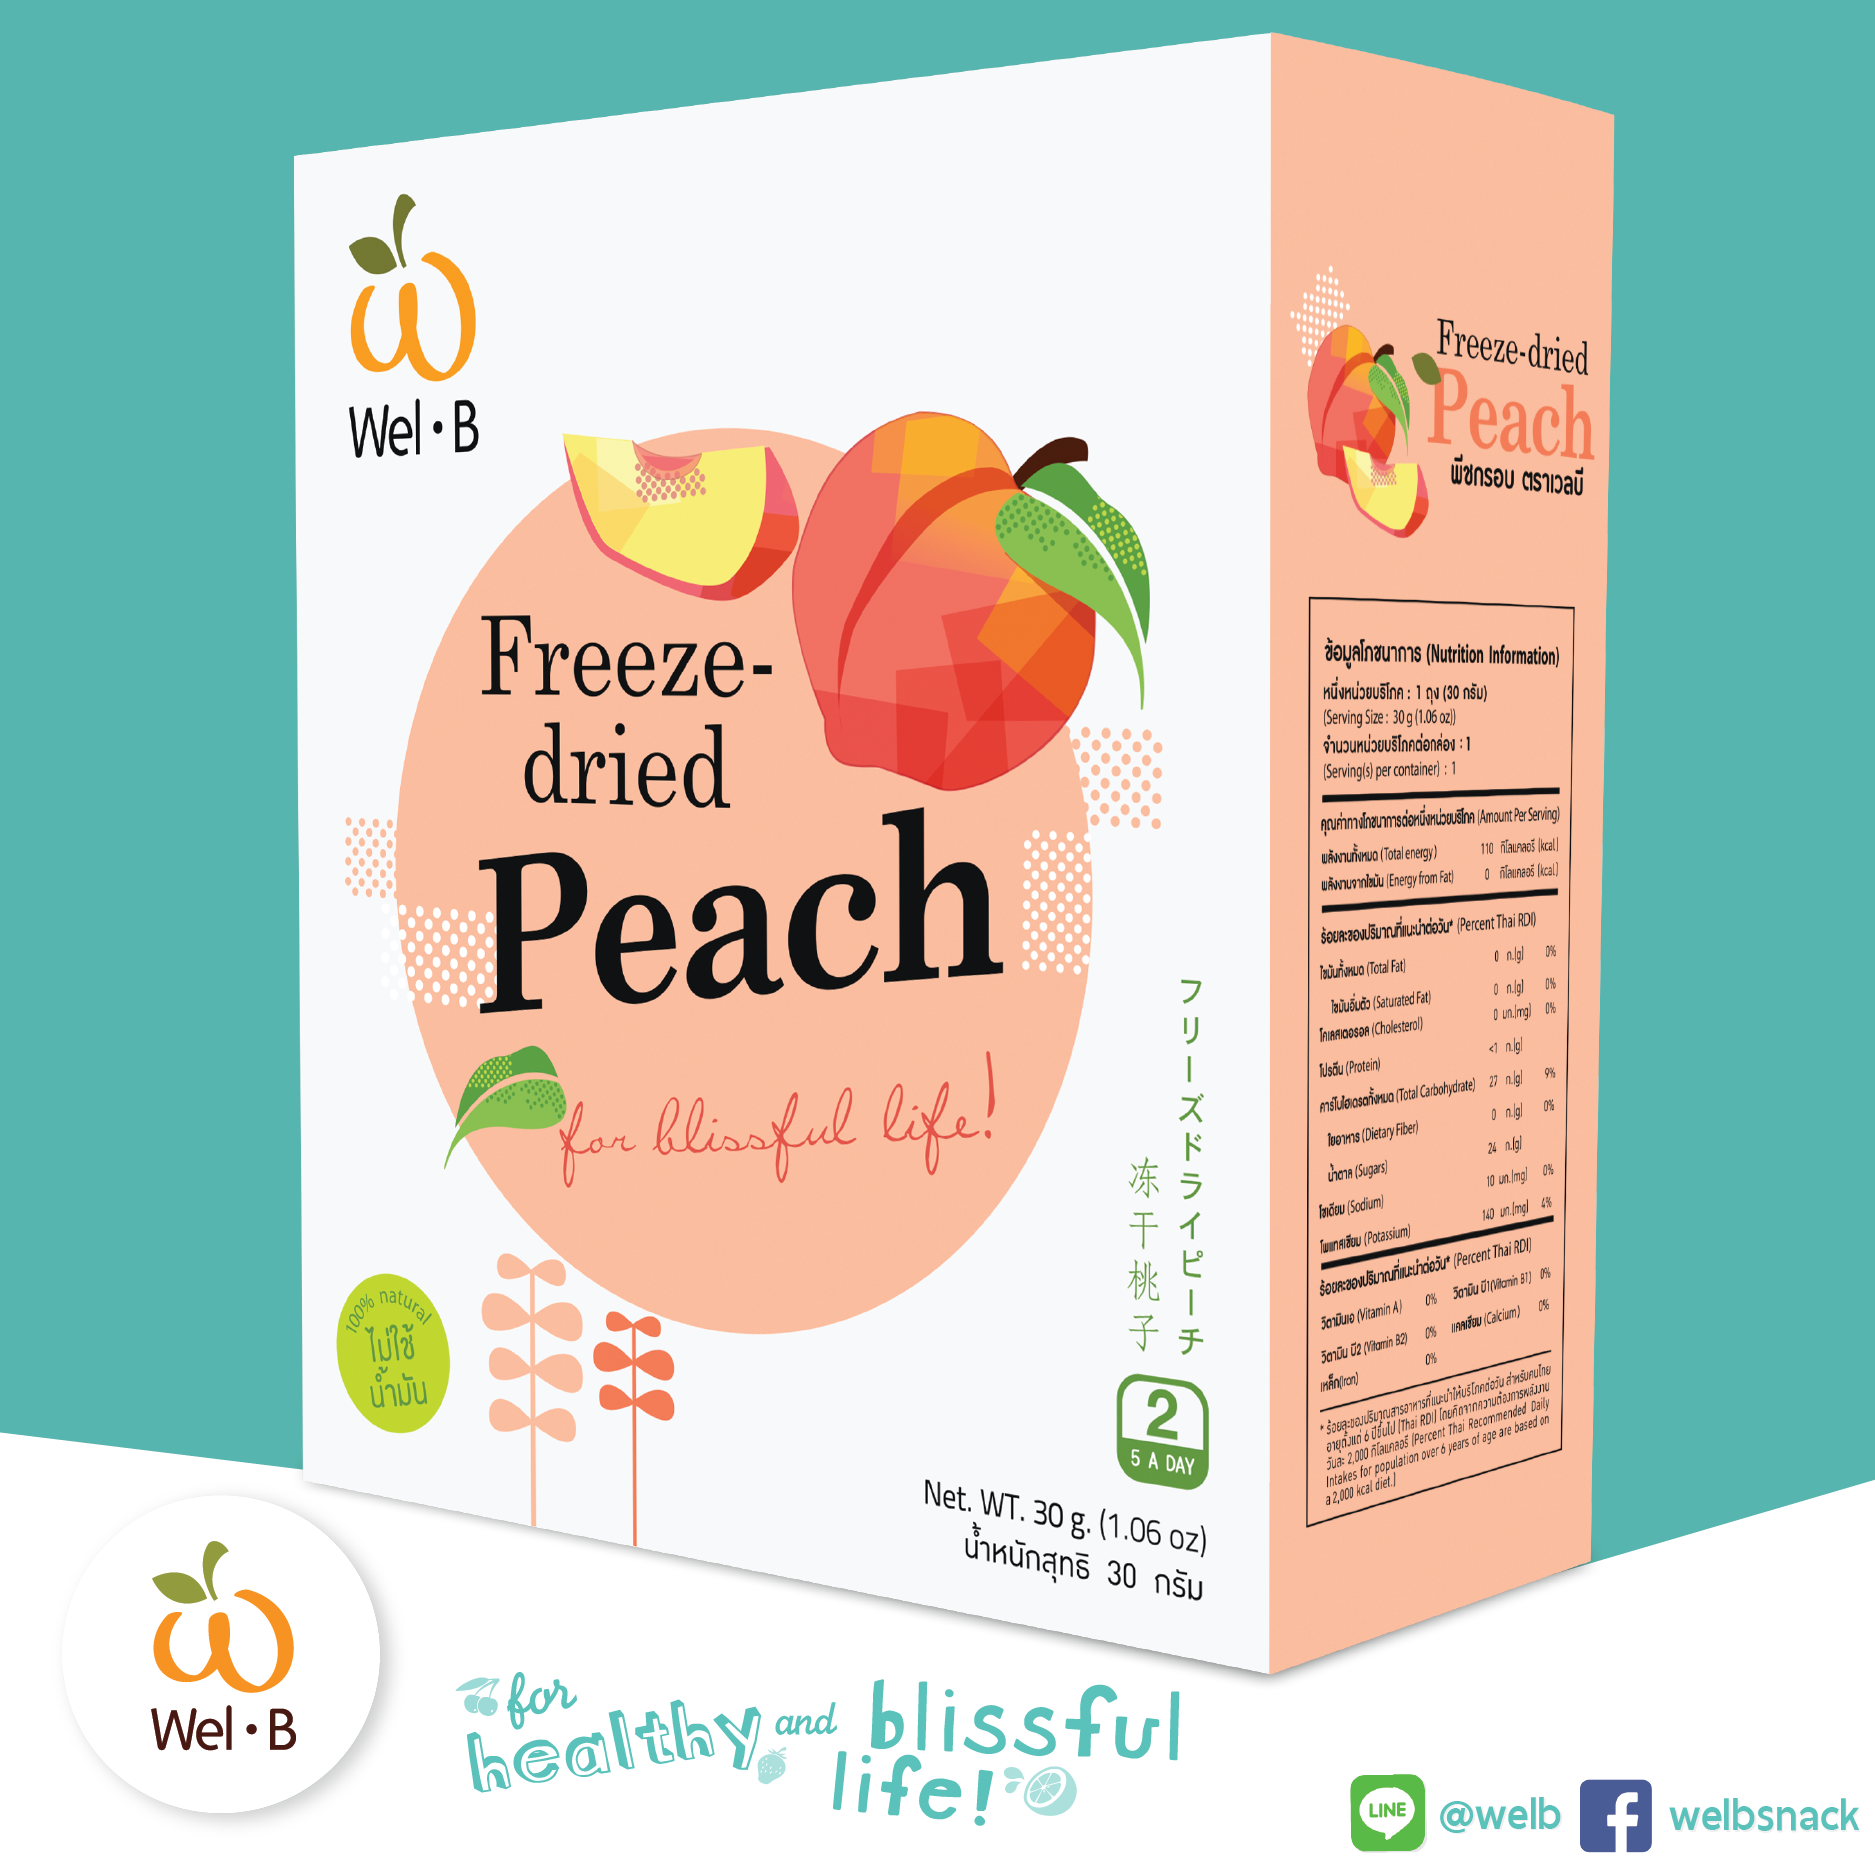 Wel-B FD Peach 30g. – WelB Snack